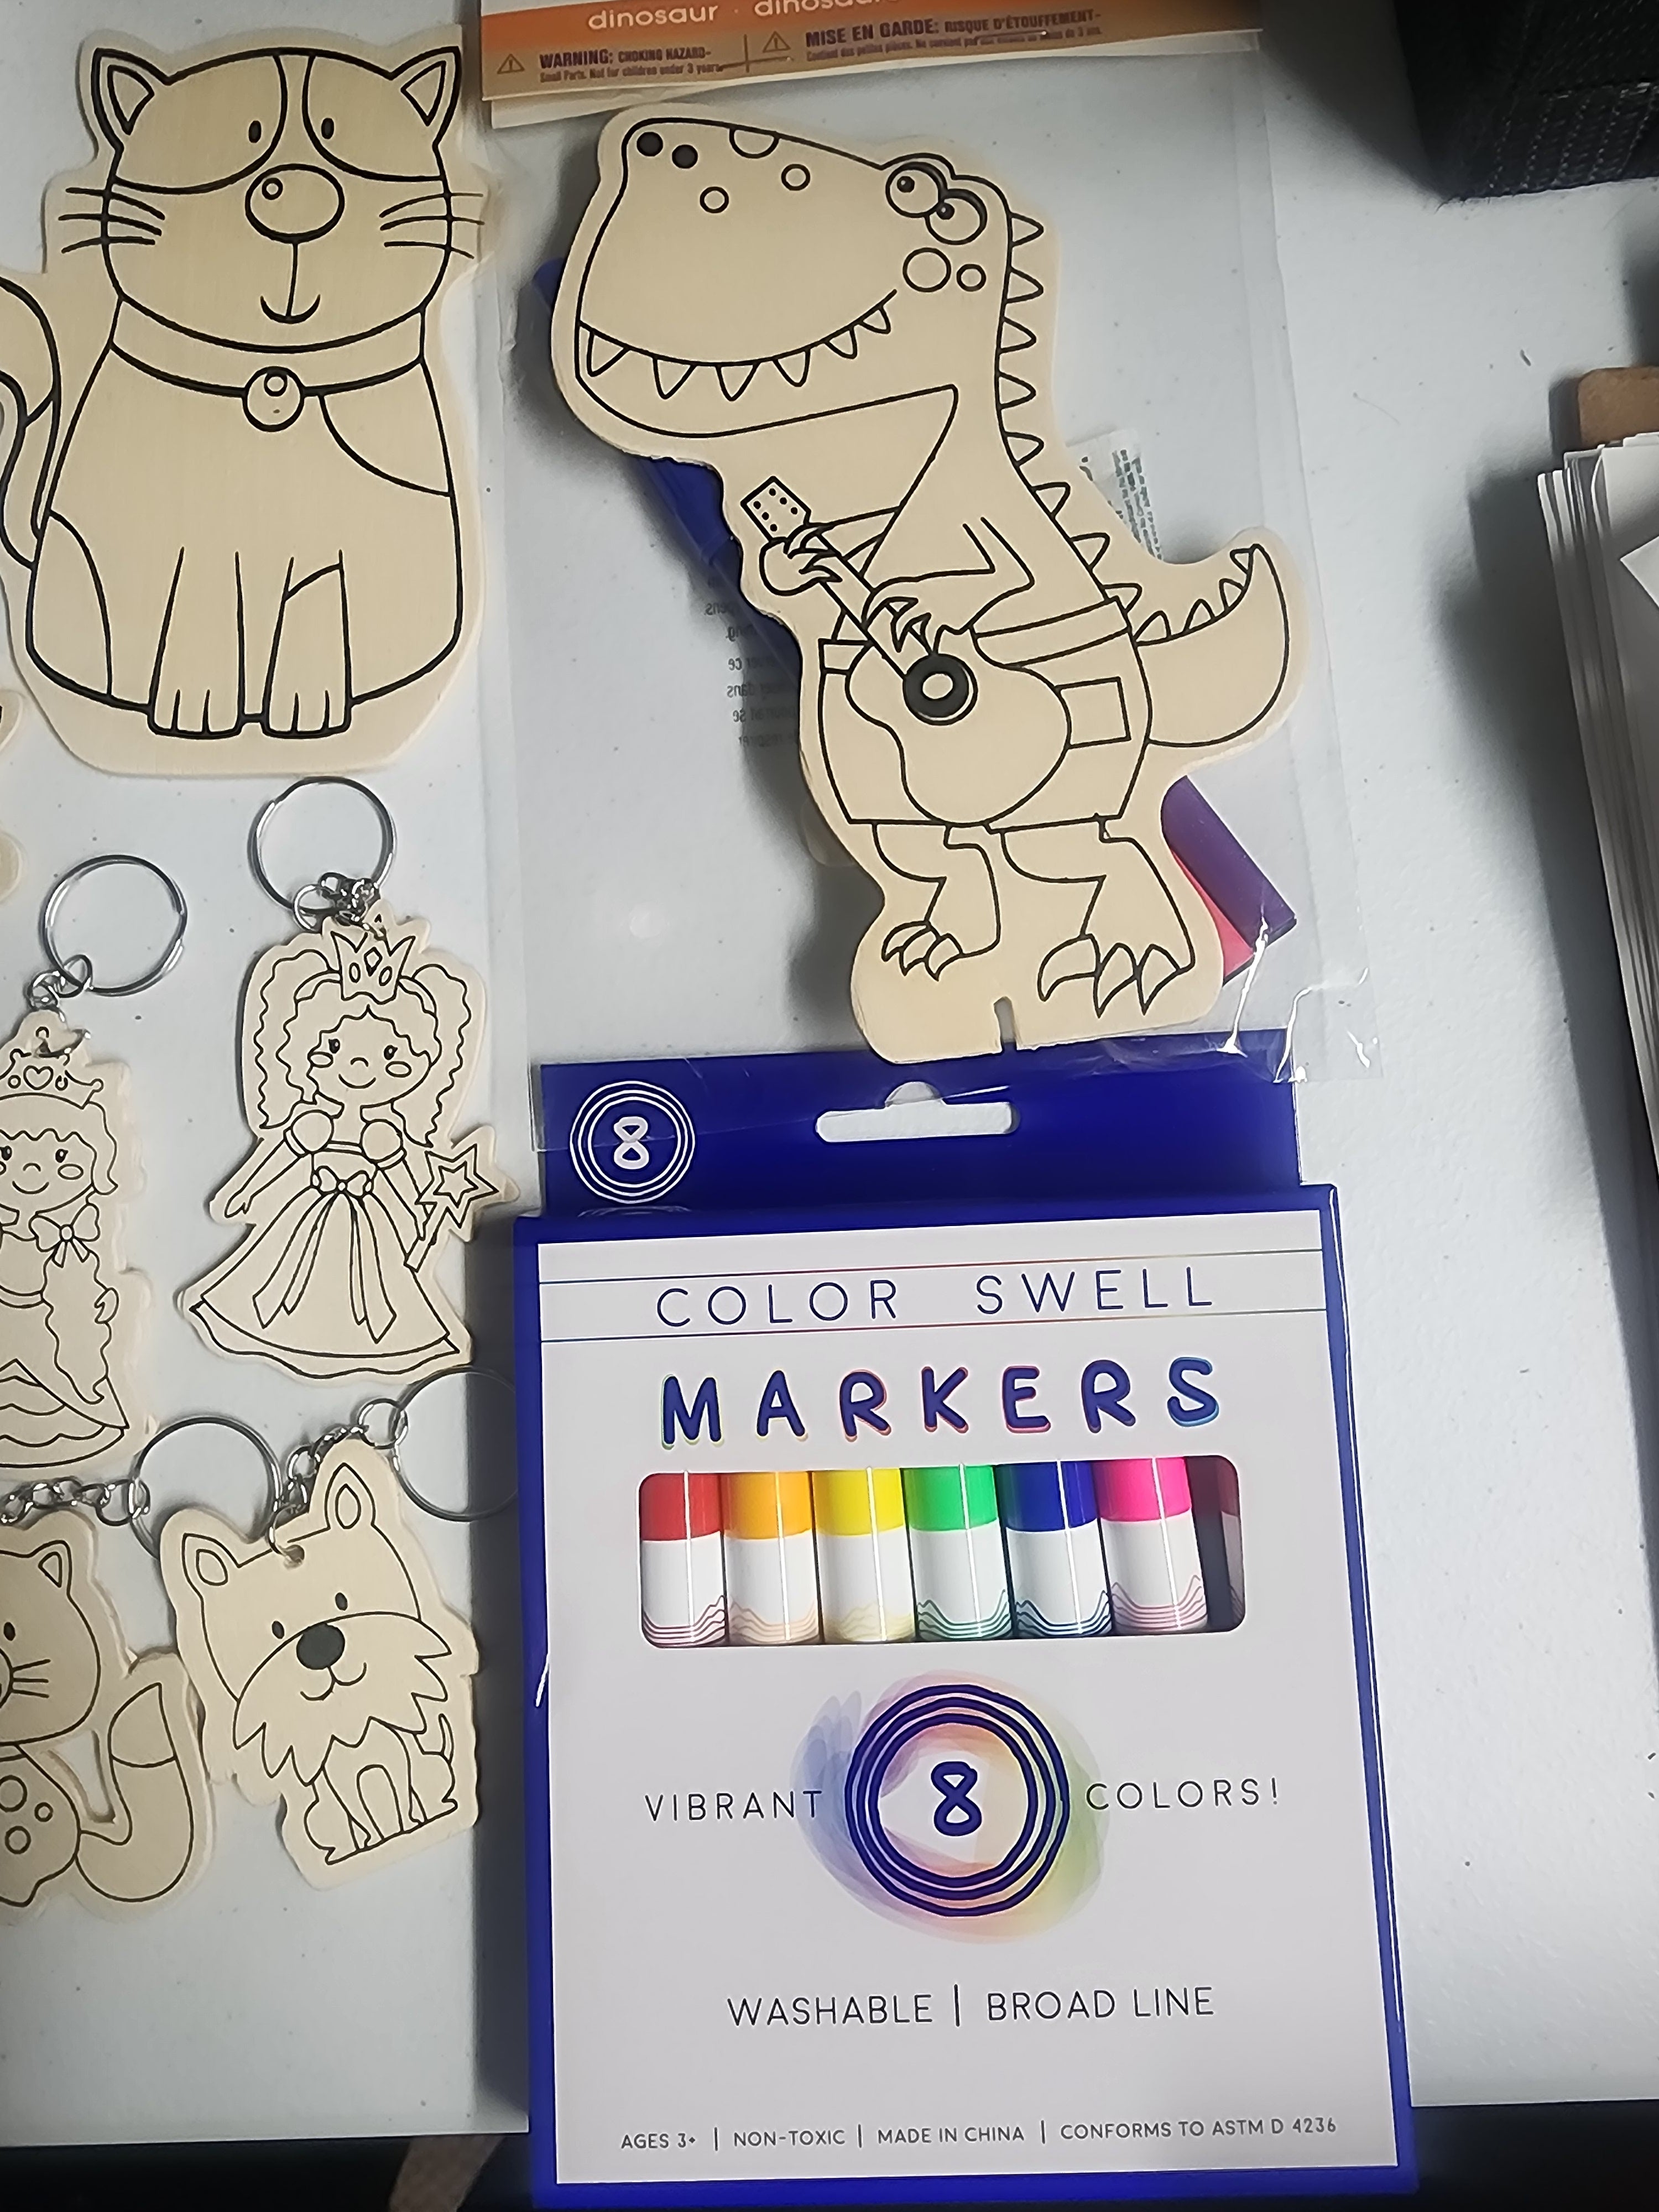 DIY Wood Dinosaur Unicorn Cat Dog Keychains Kids Art Craft Kit Bundle Lot